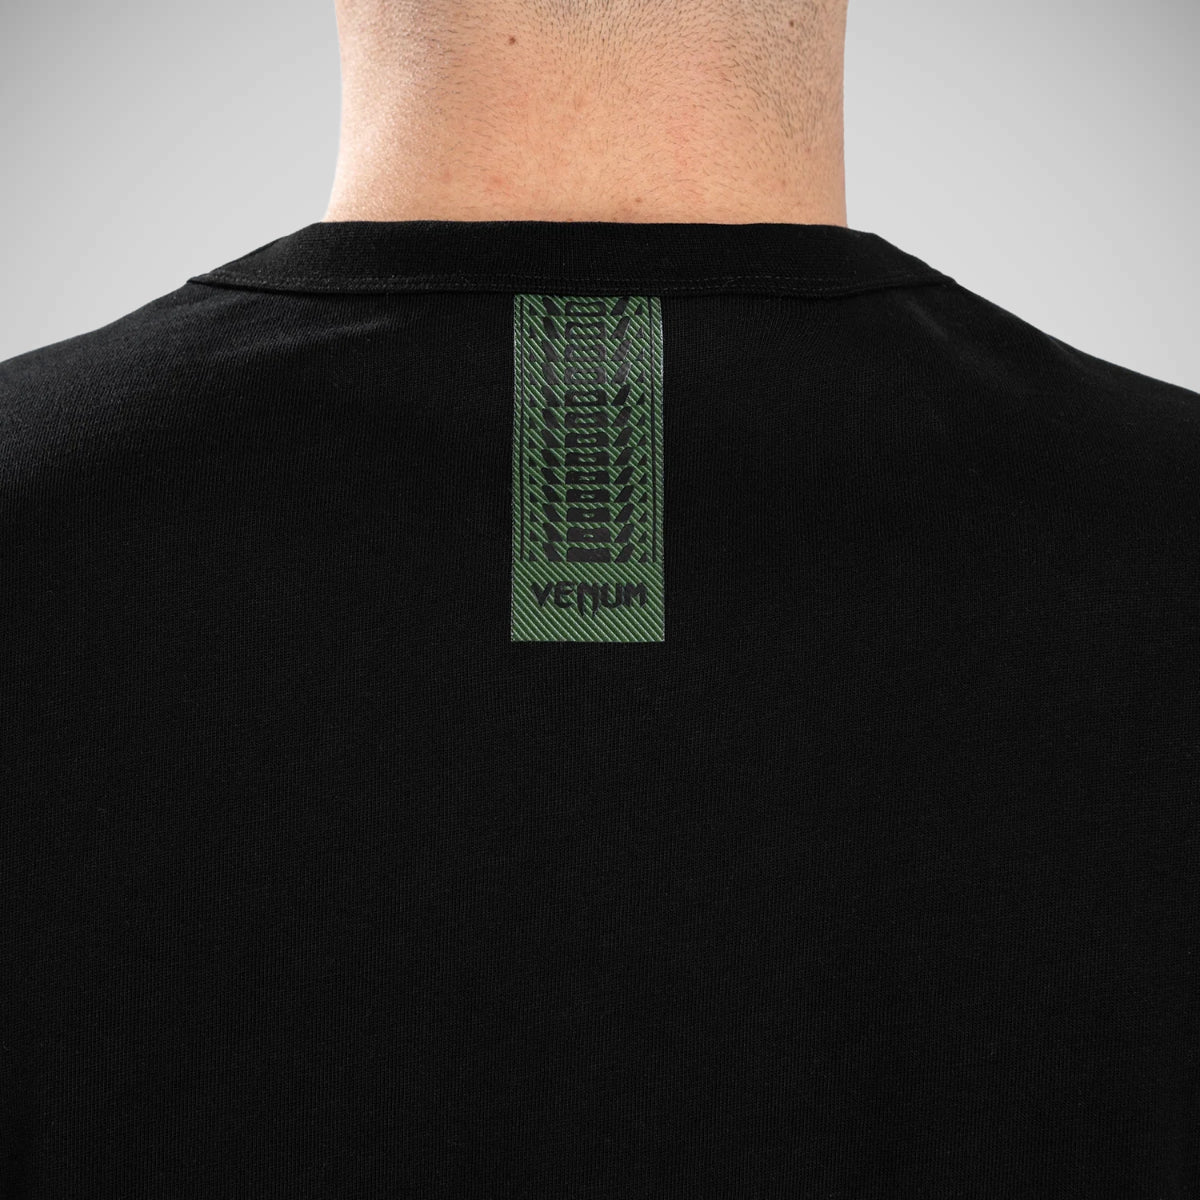 Black/Green Venum Connect XL T-Shirt